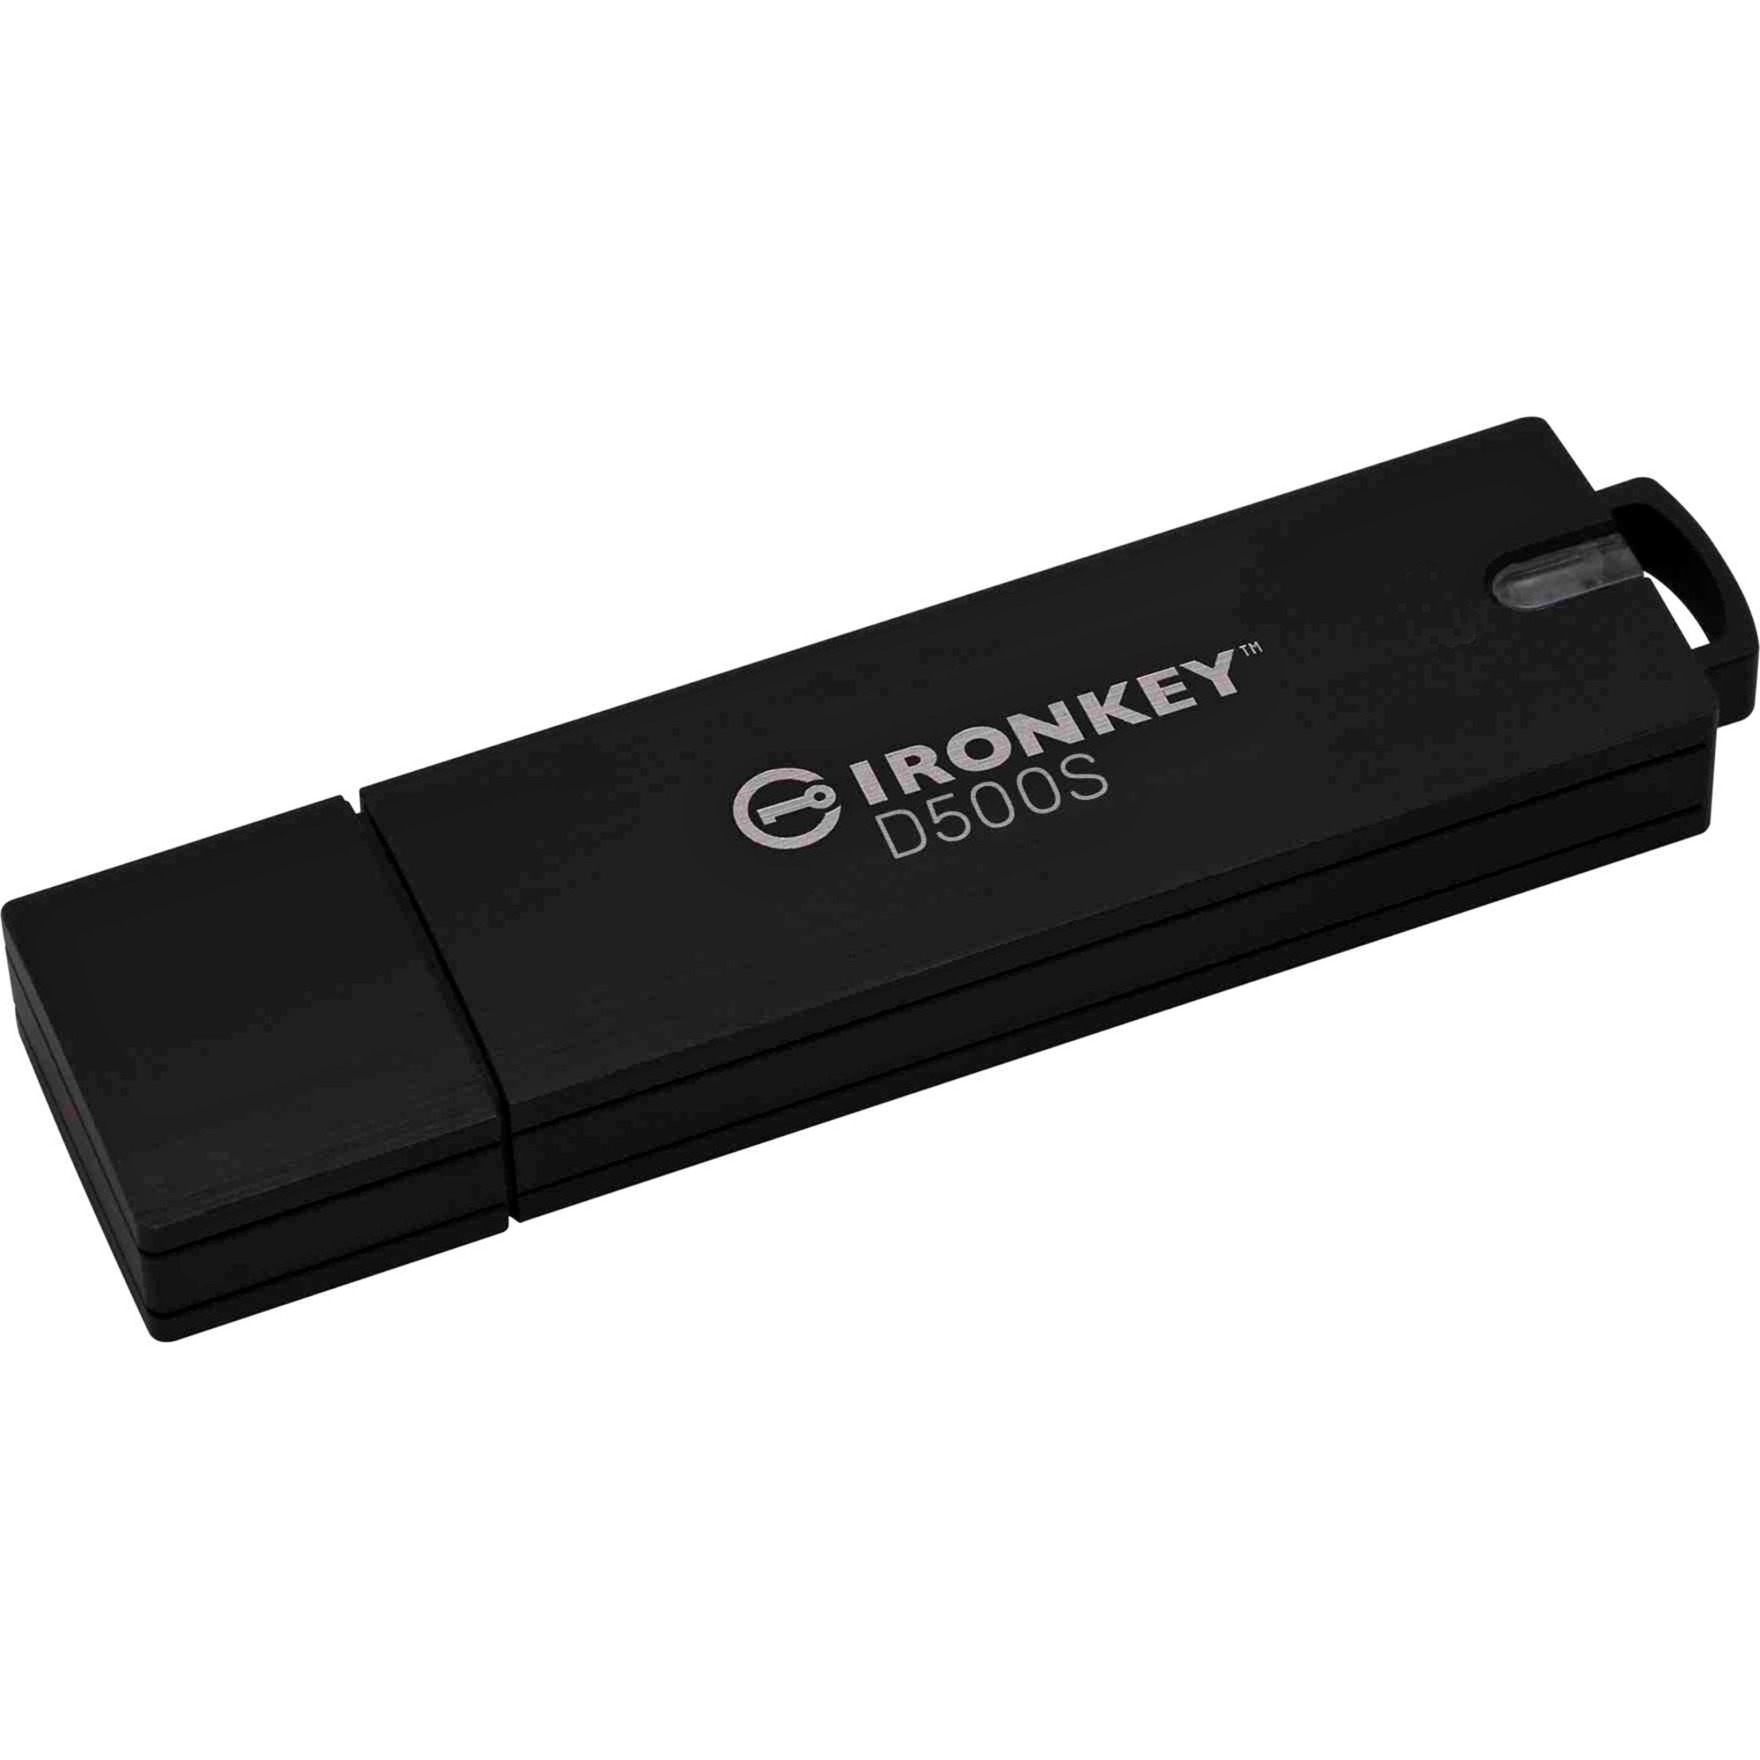 IronKey D500S 8 GB, USB-Stick von Kingston